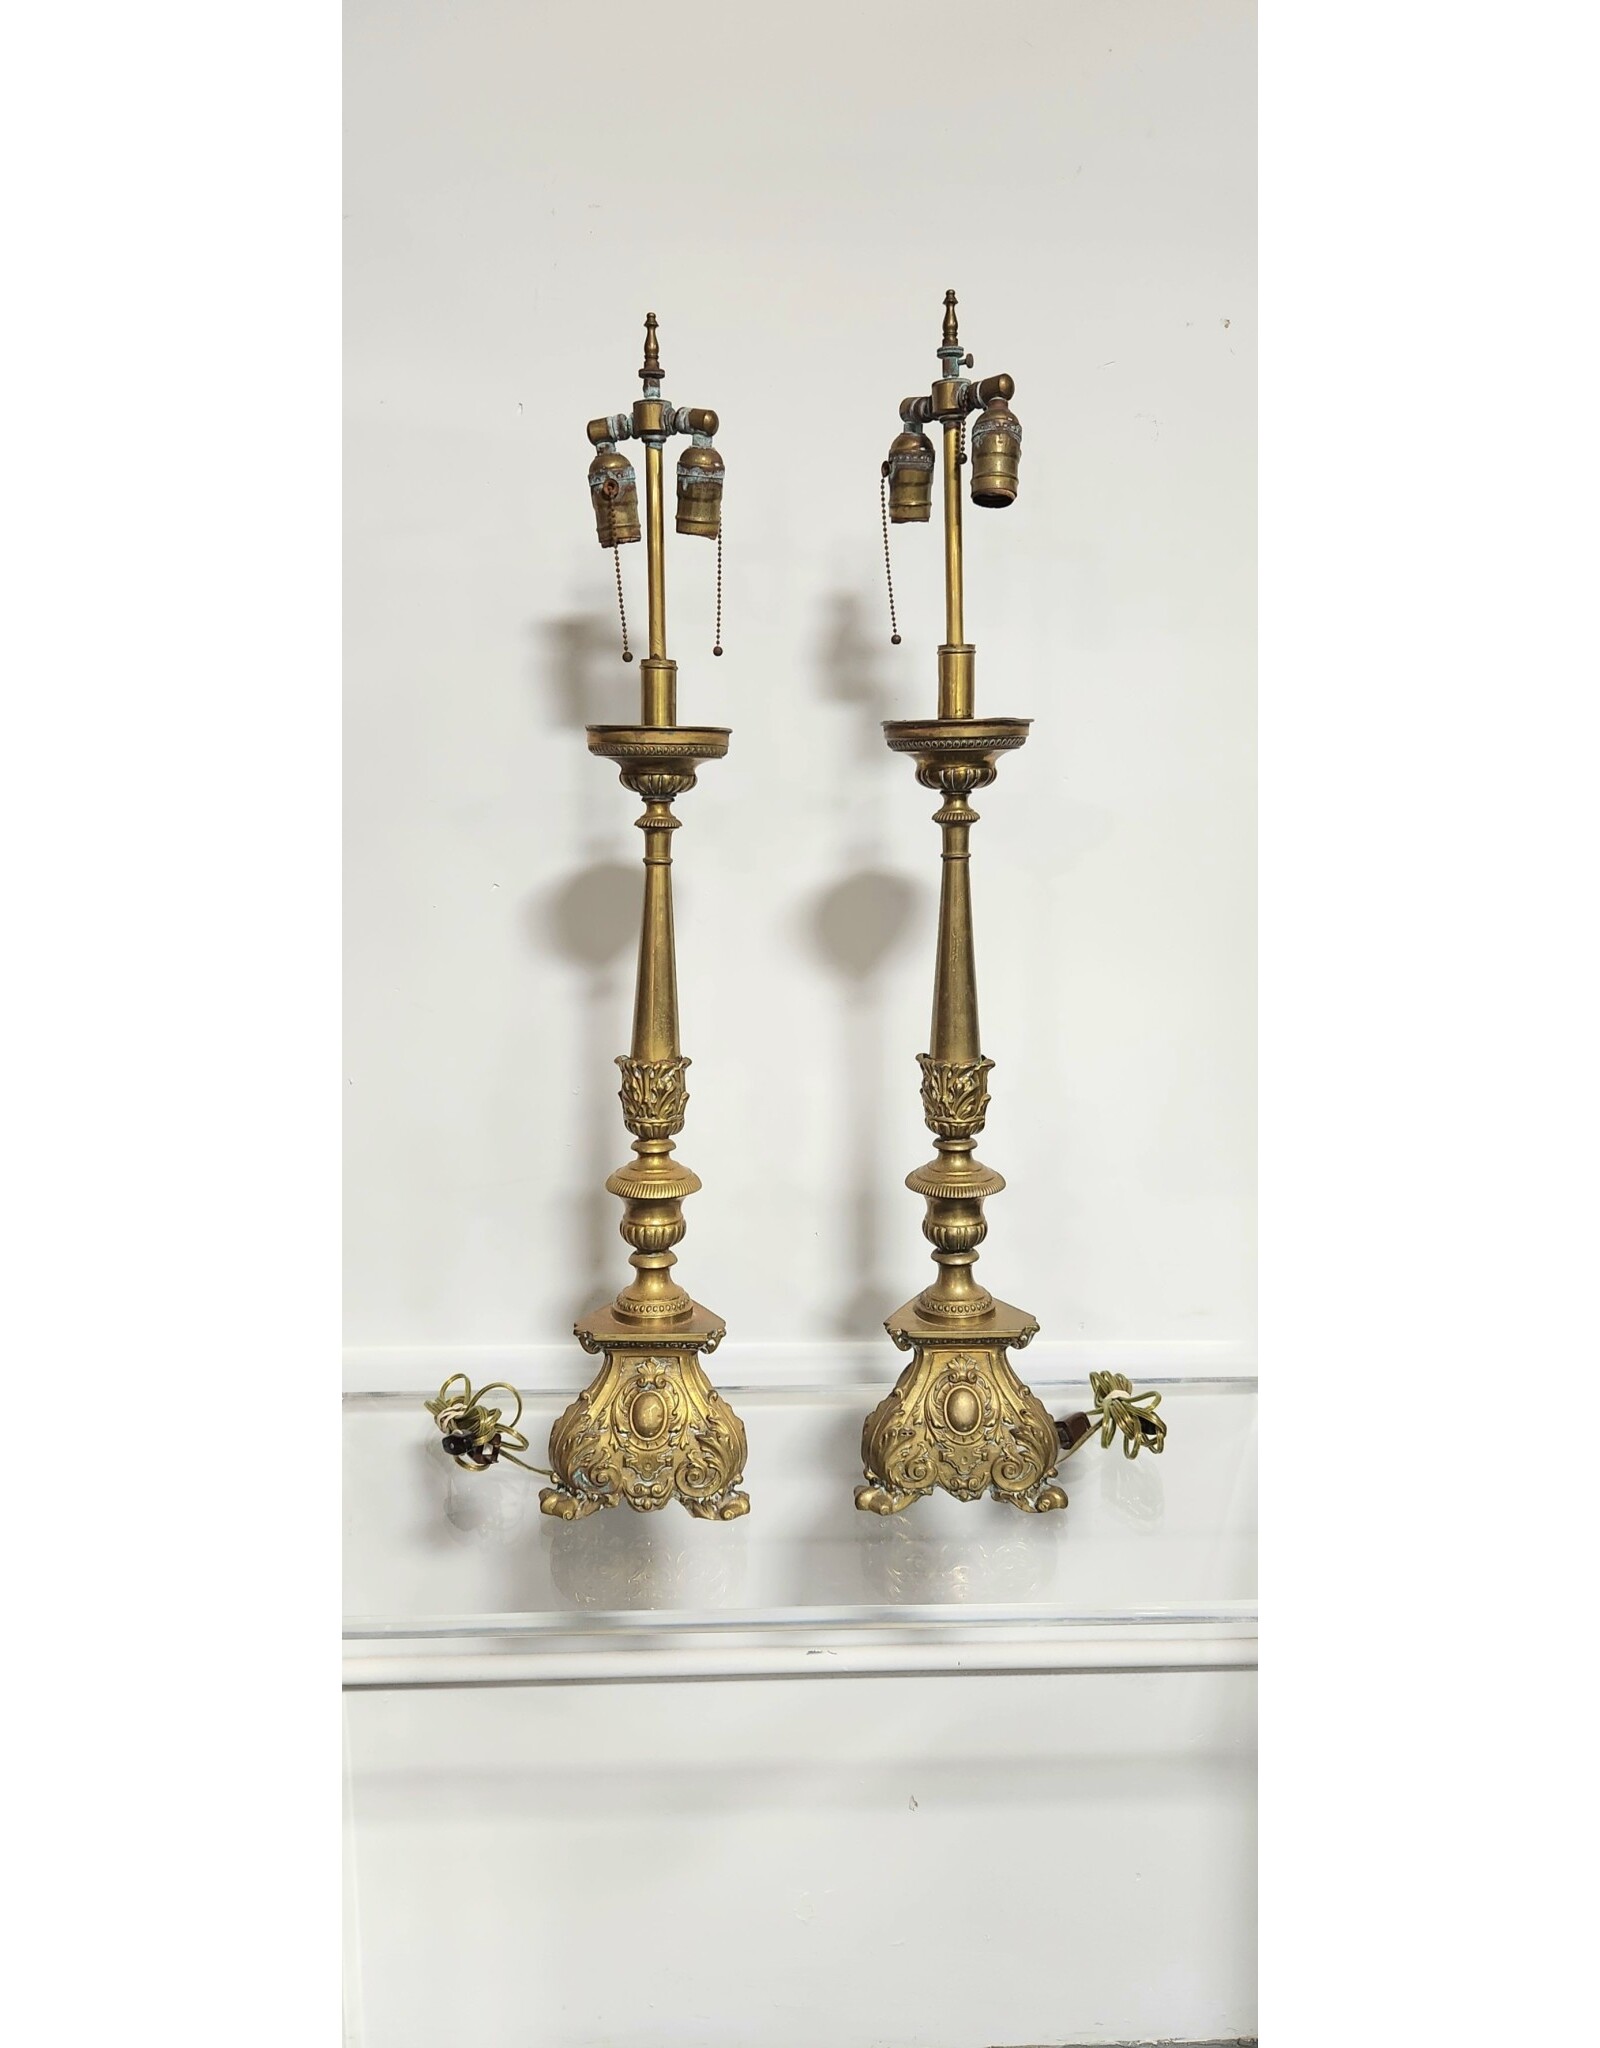 Antique Prick-It Stick Brass Table Lamp